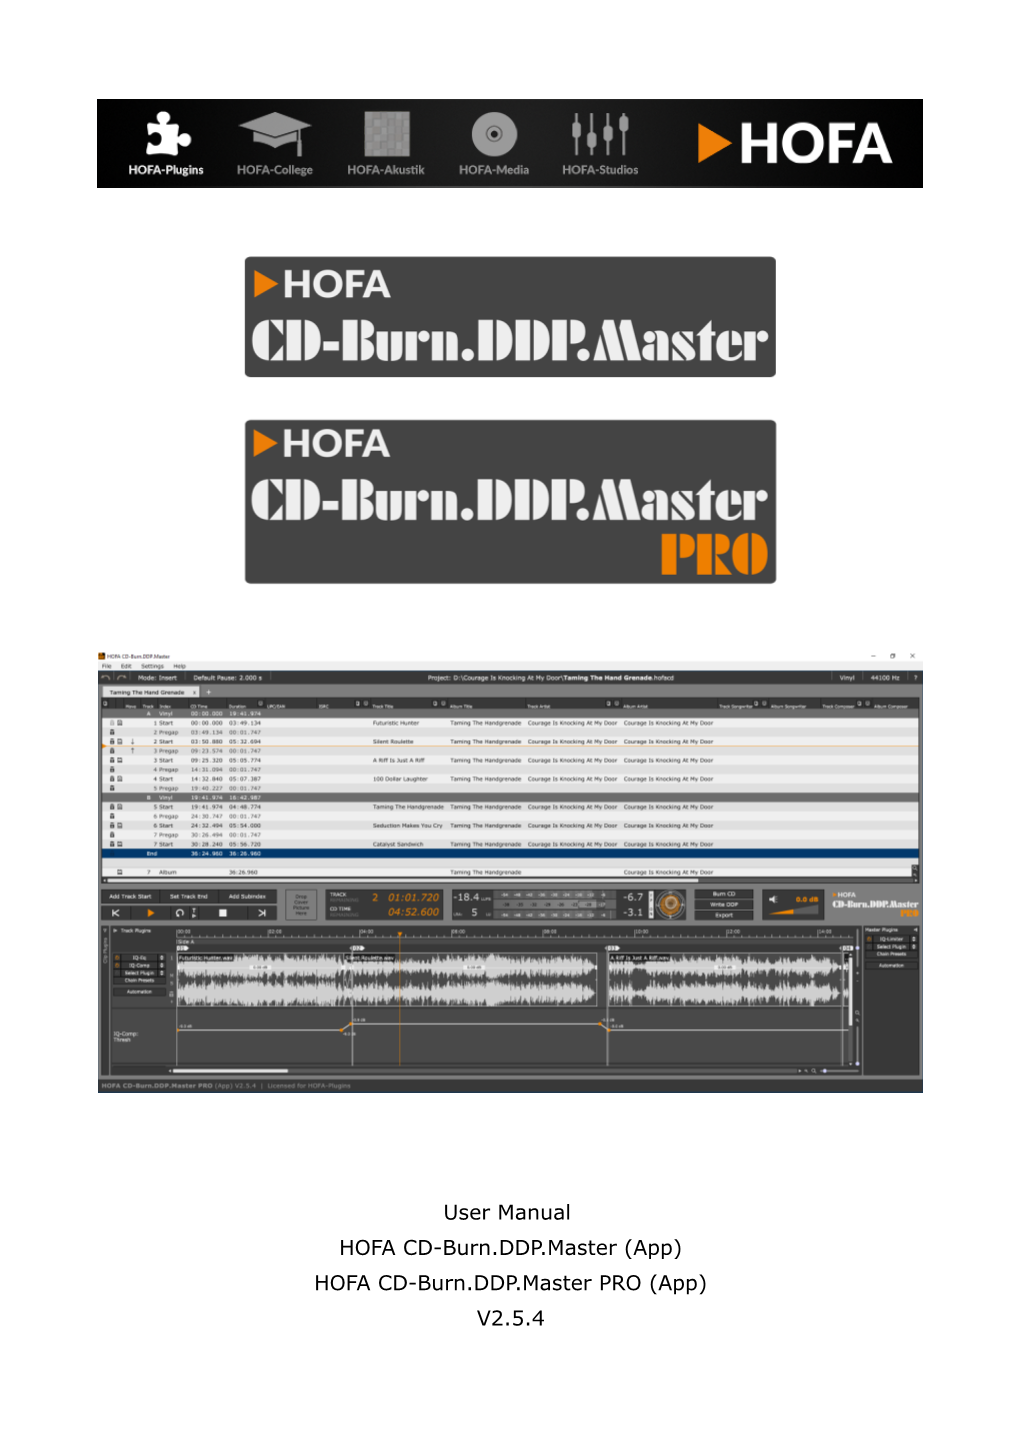 User Manual HOFA CD-Burn.DDP.Master (App) HOFA CD-Burn.DDP.Master PRO (App) V2.5.4 Content Introduction